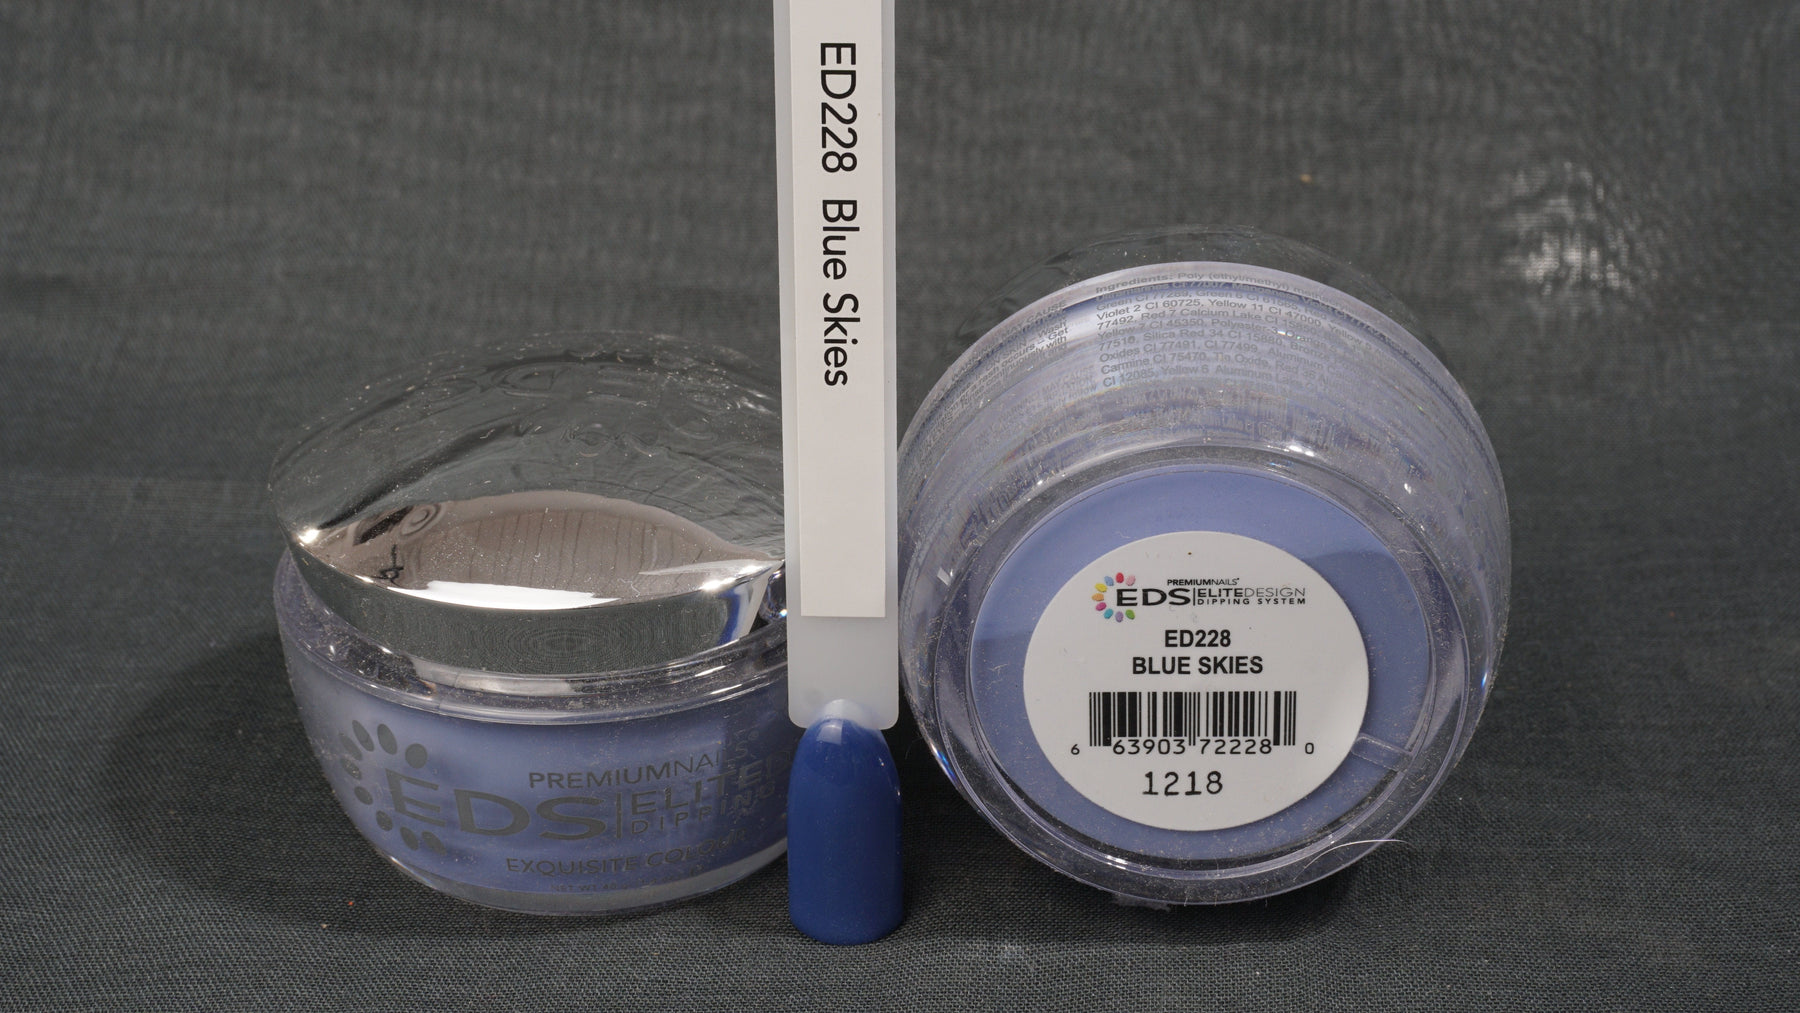 ED228 Blue Skies 40 g - ELITEDESIGN PREMIUM NAILS Dip Powder - Jessica Nail & Beauty Supply - Canada Nail Beauty Supply - ELITEDESIGN DIP POWDER